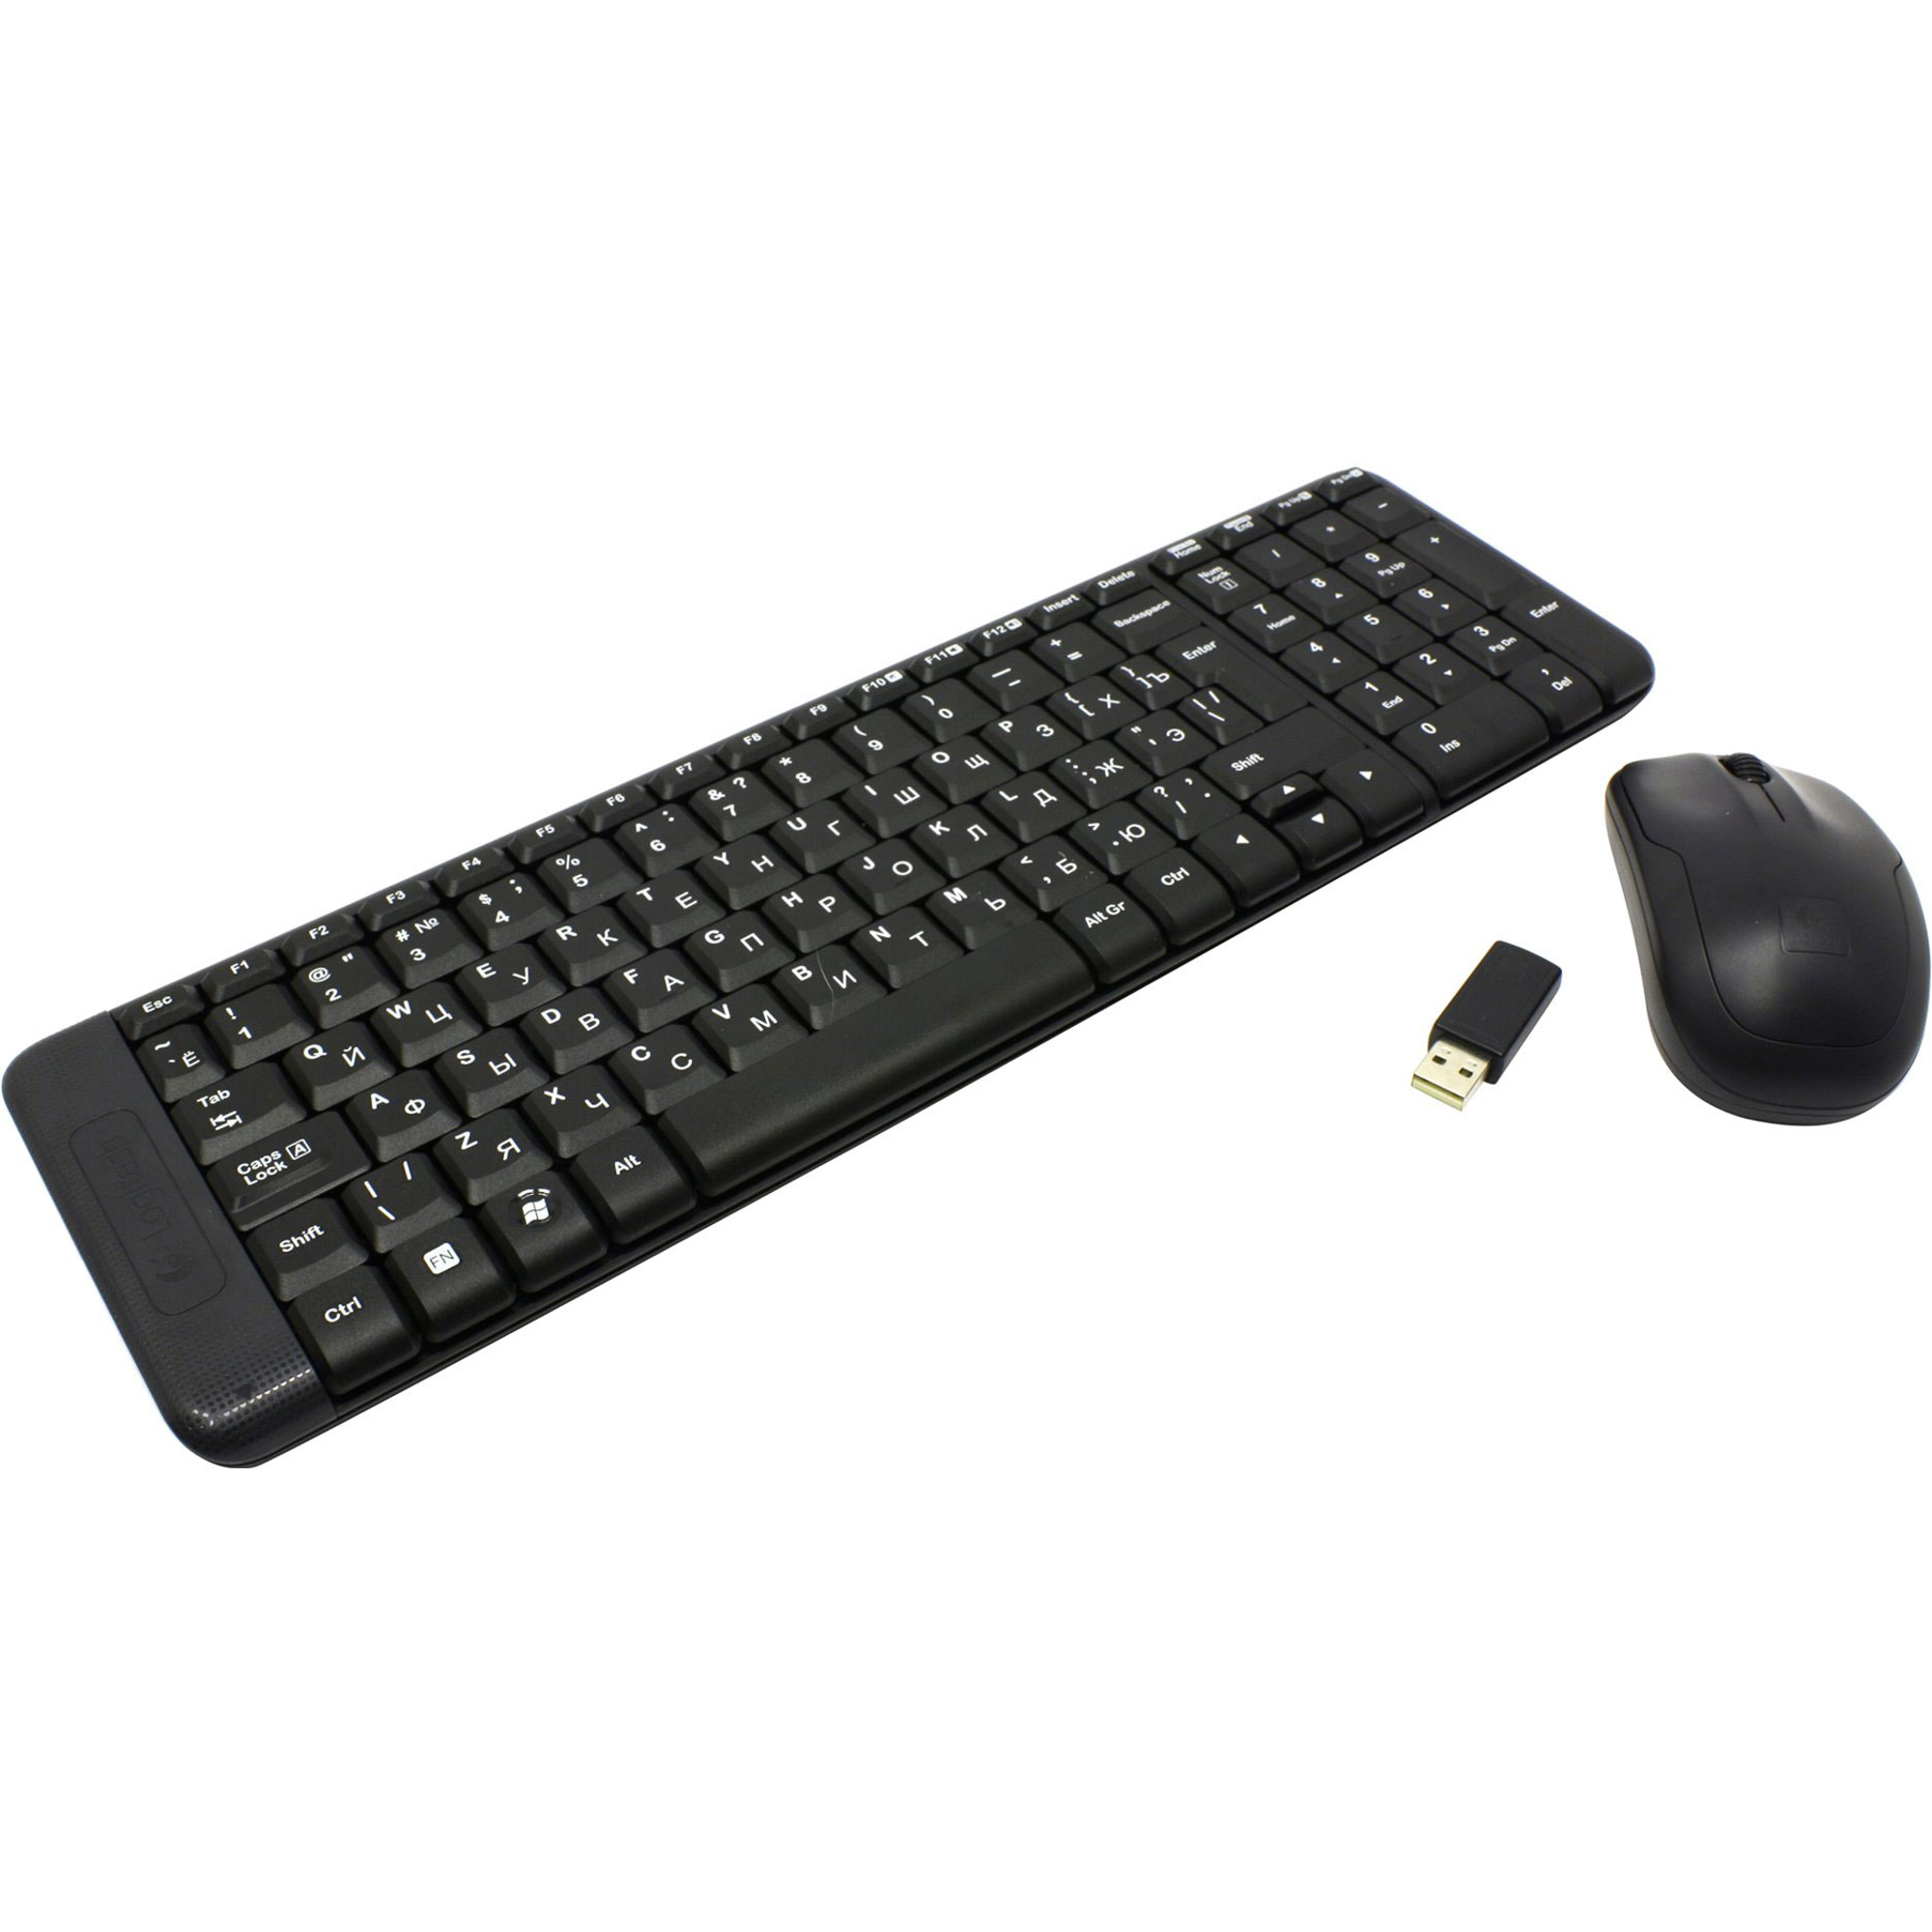 Комплект клавиатура + мышь Logitech Wireless Desktop MK220 комплект клавиатура мышь logitech mk120 desktop black usb 920 002561